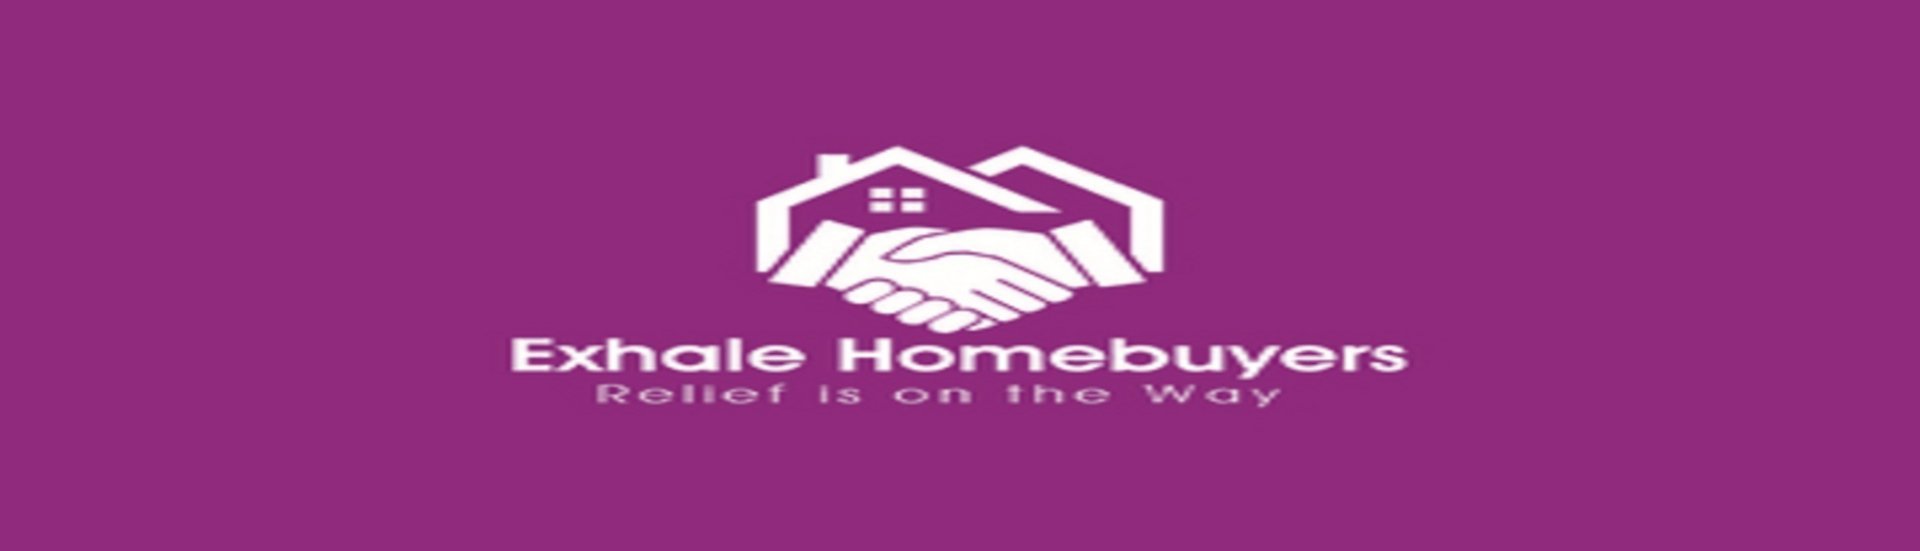 Exhale Homebuyers logo